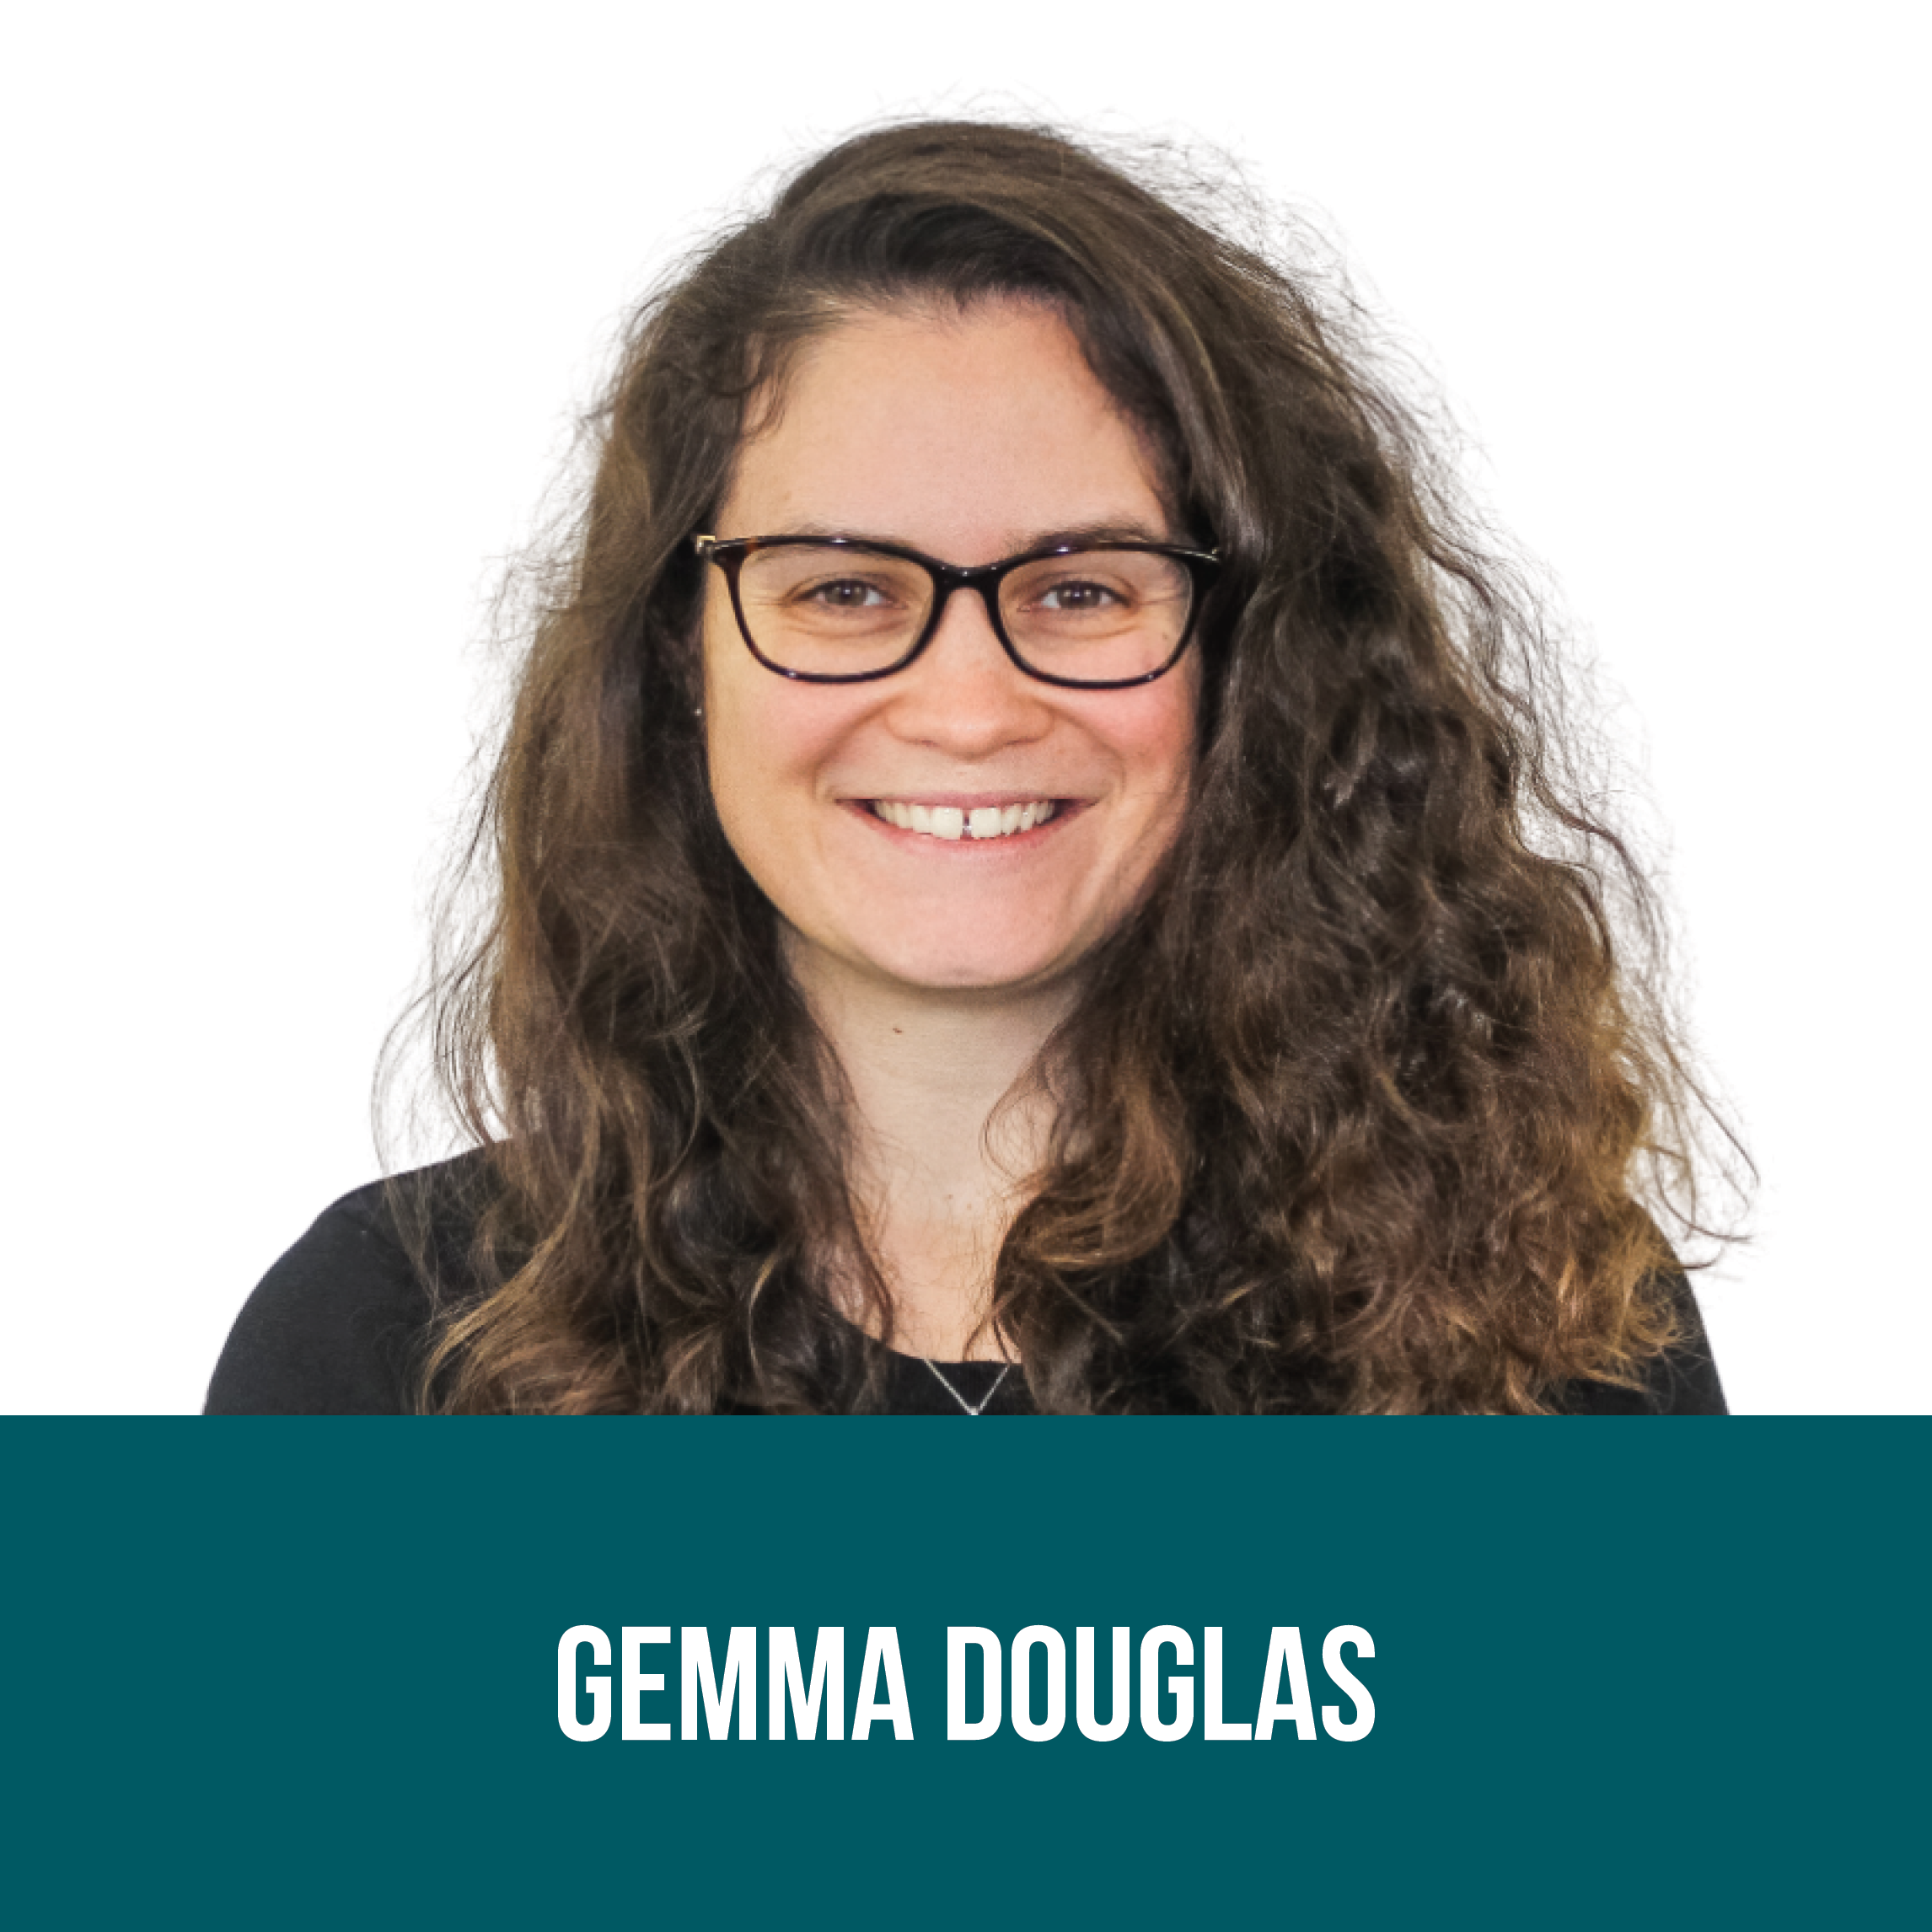 Gemma Douglas